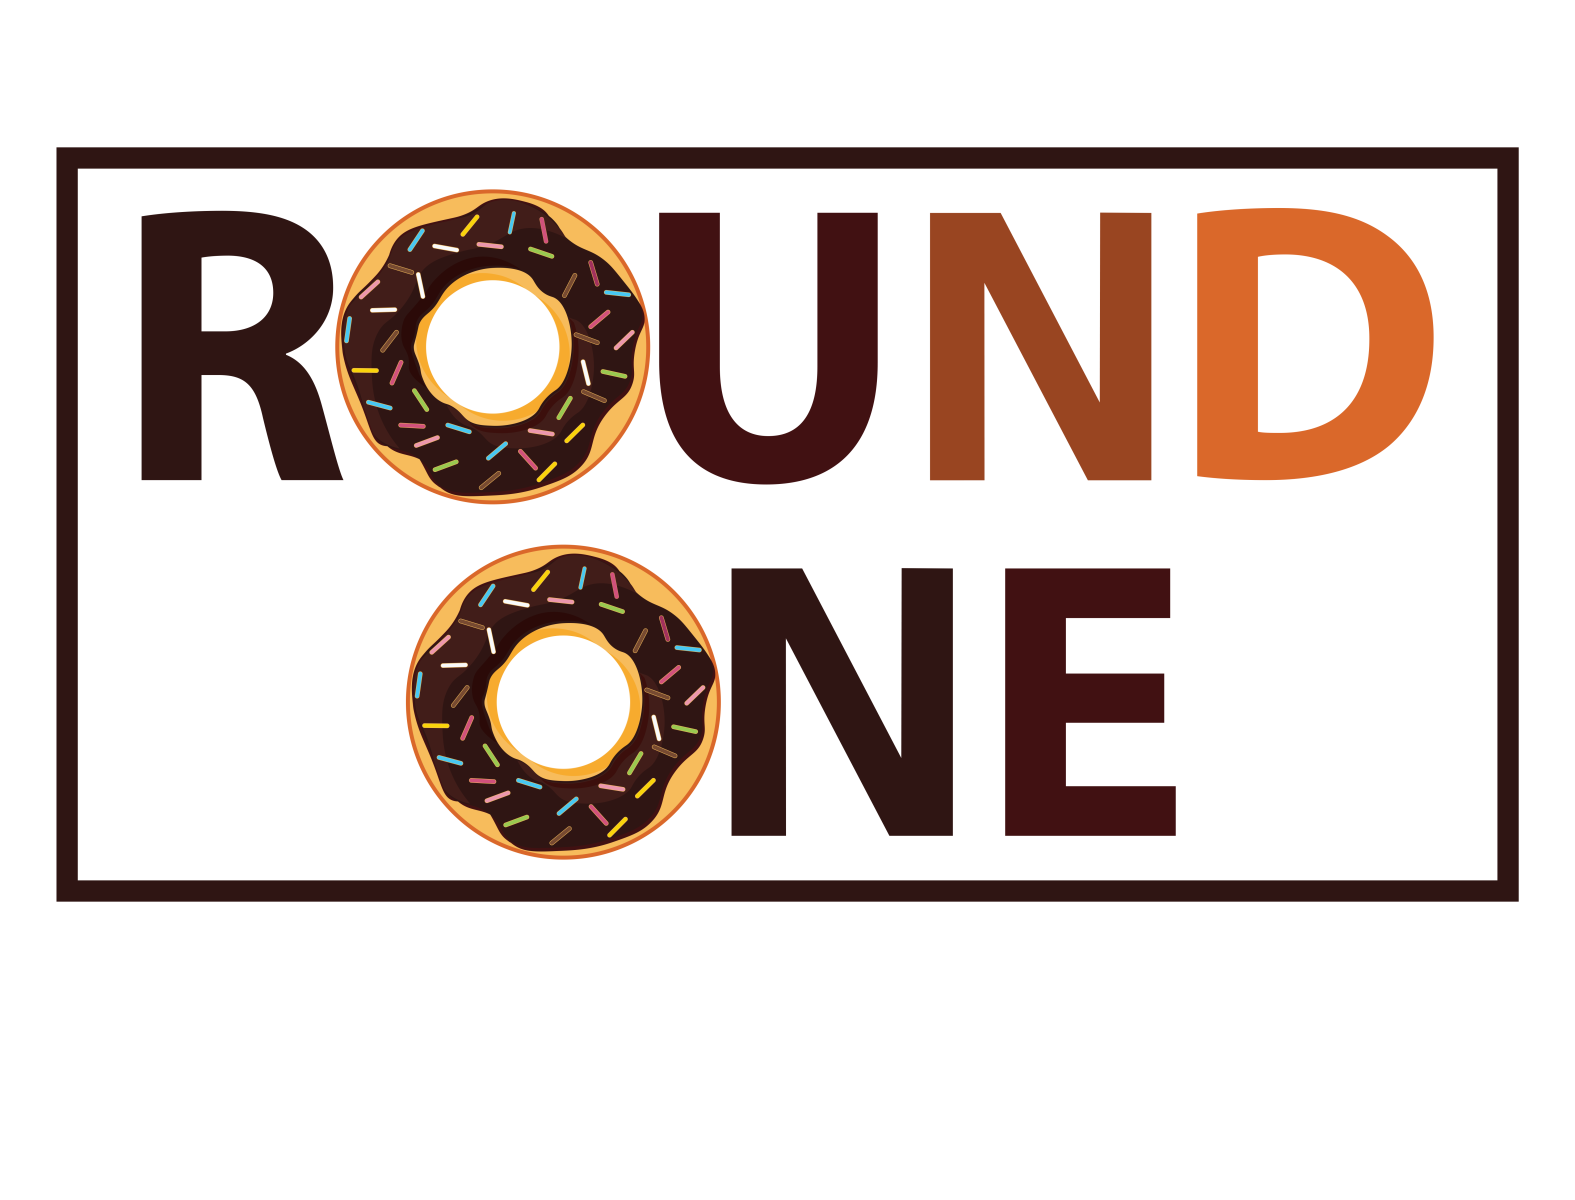 Round round you know